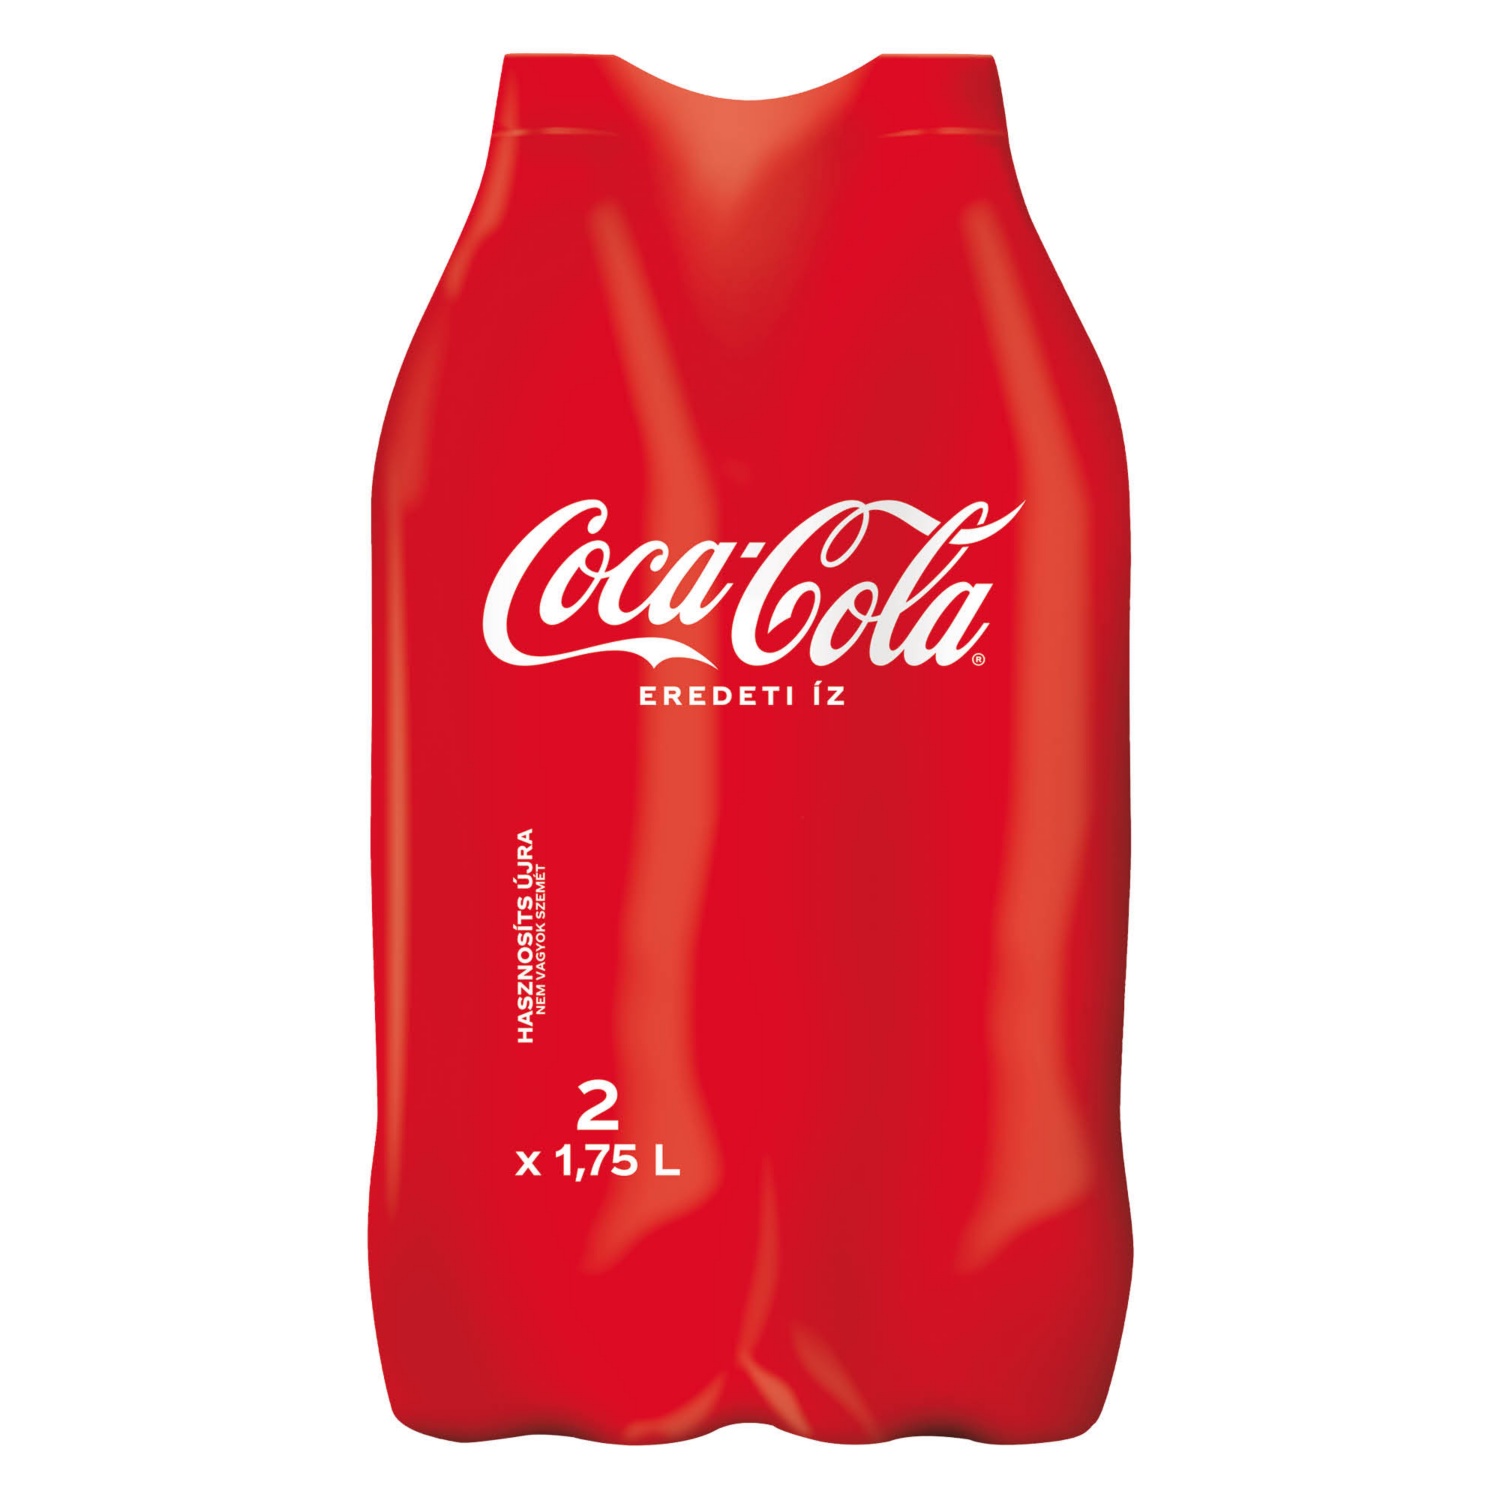 COCA-COLA Szénsavas üdítőital, 2 palack, 2 x 1,75 l